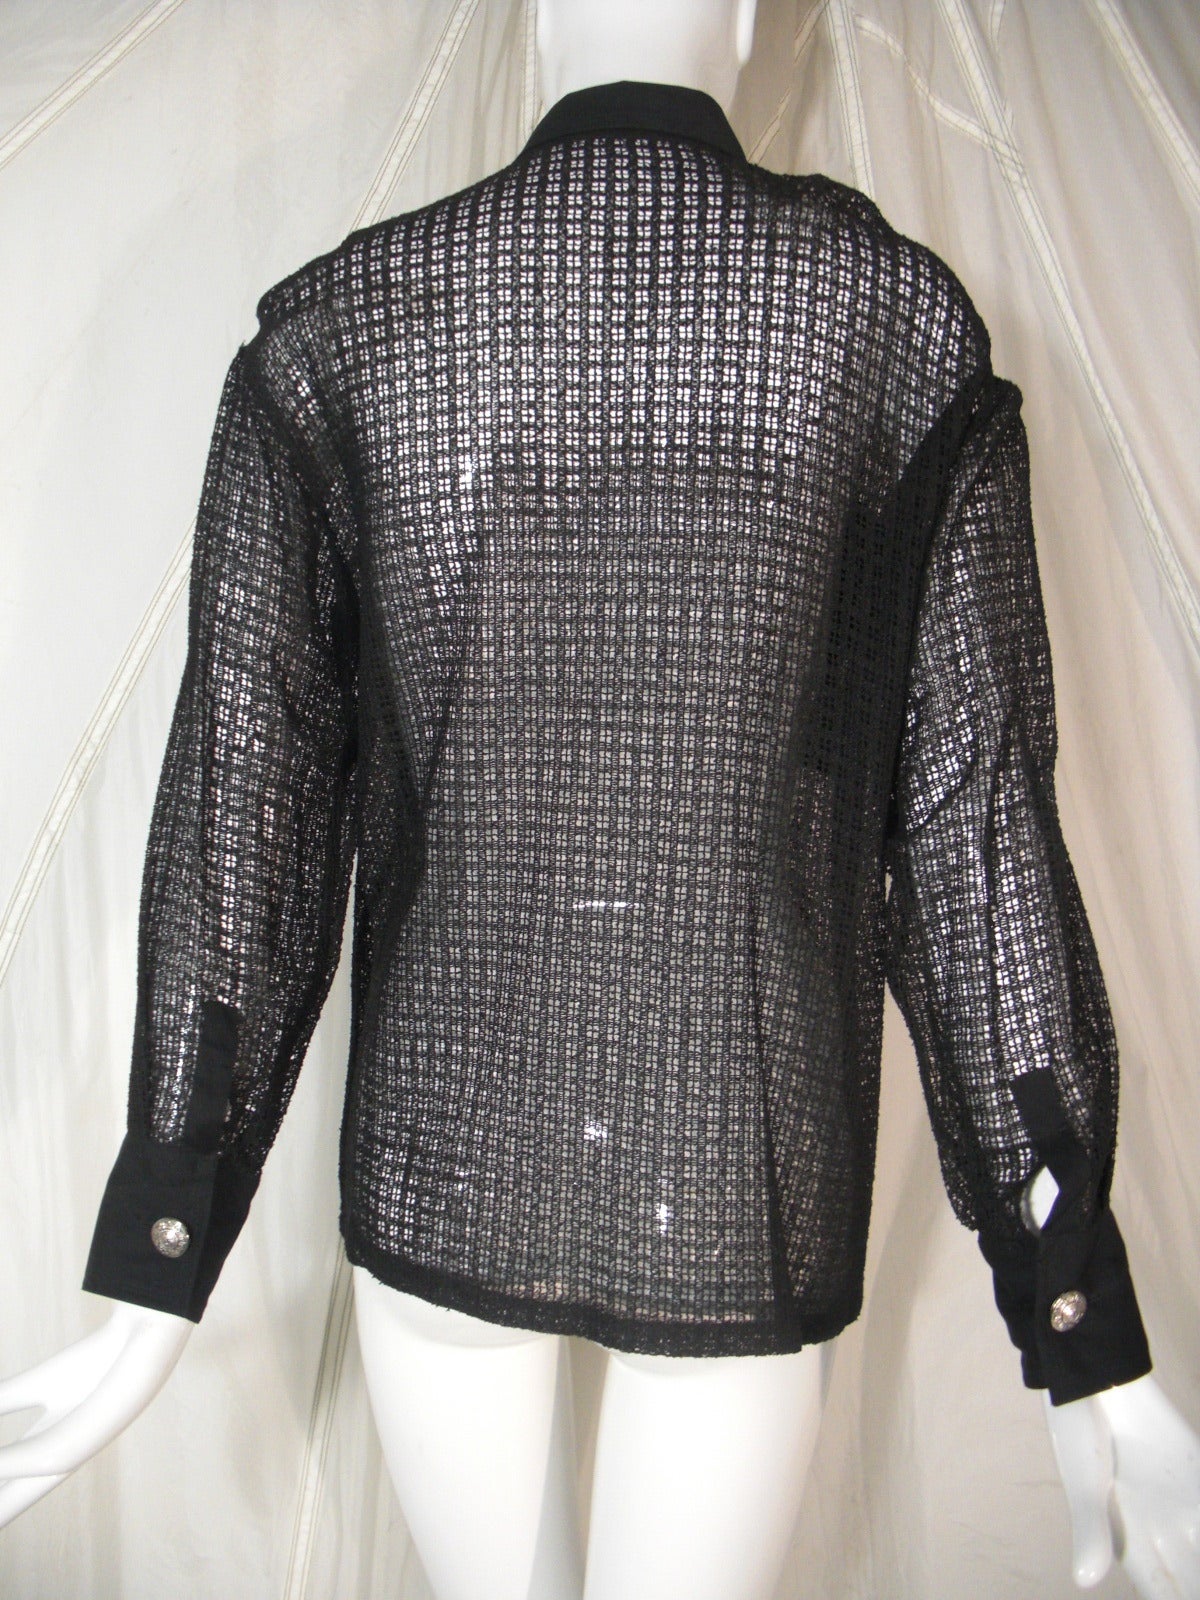 Women's 1980s Gianni Versace Black Open-Weave Cotton Blouse w/ Patch Pockets